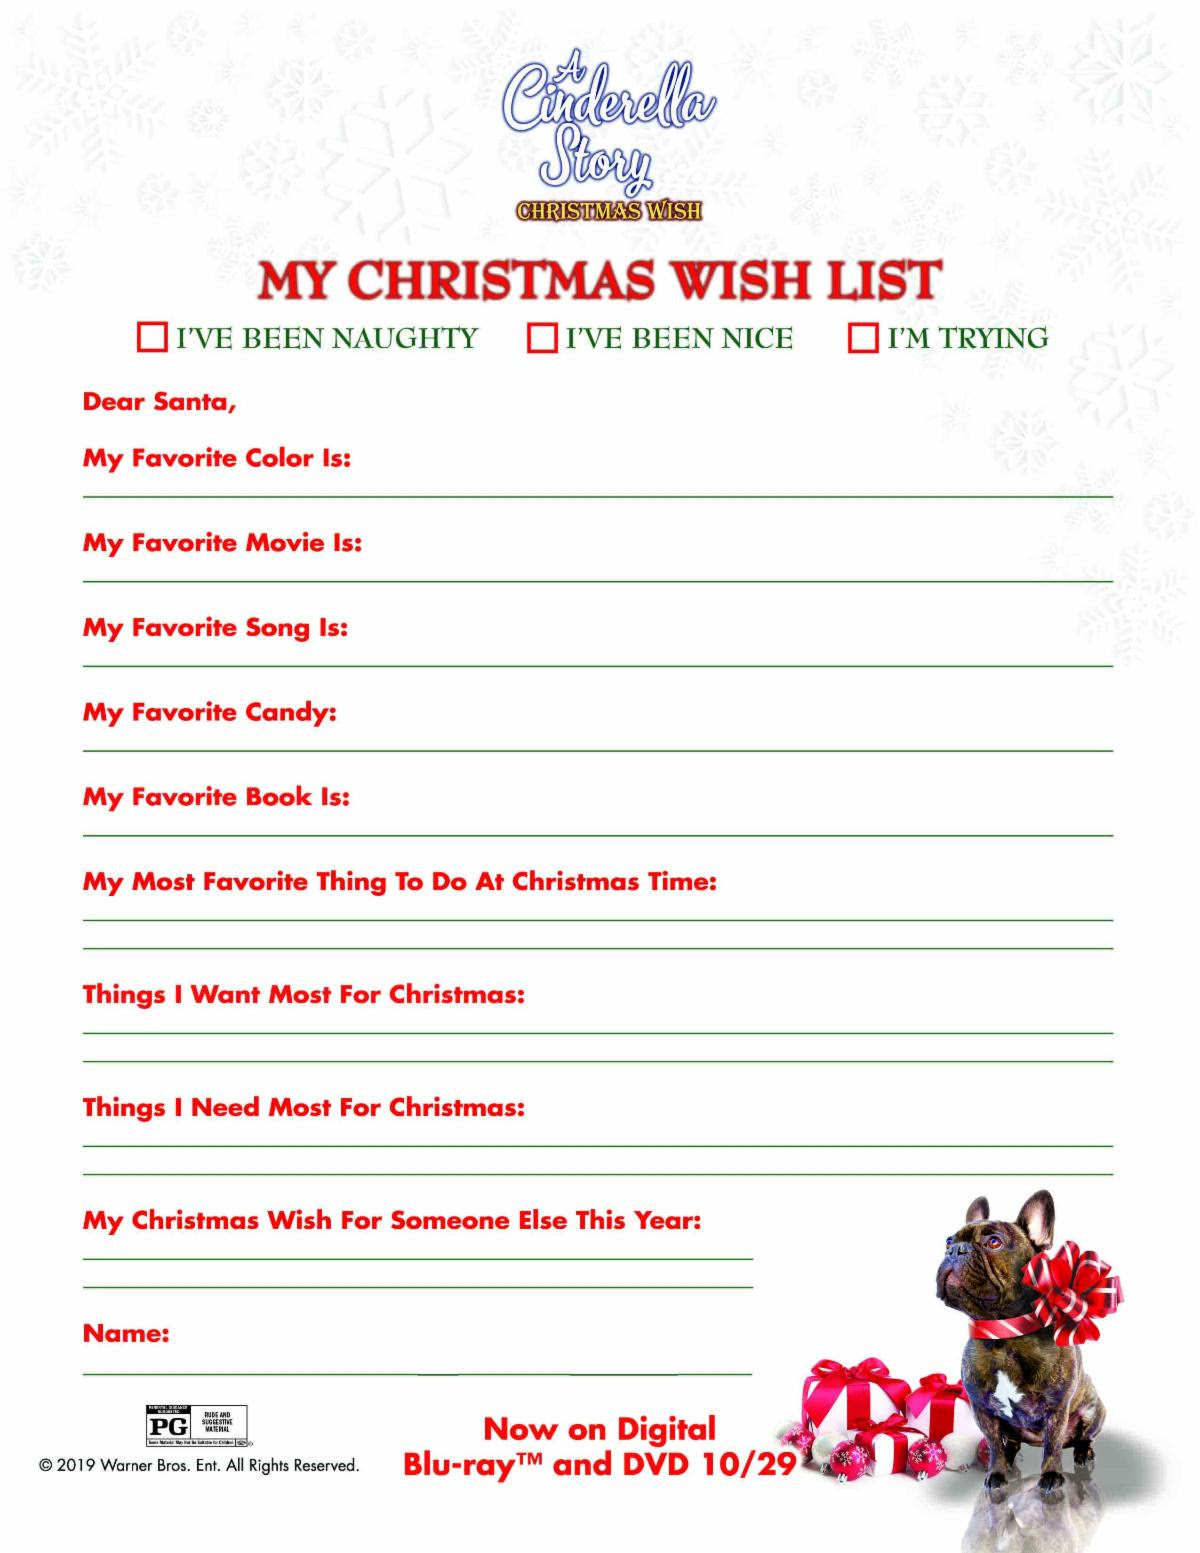 My Christmas Wish list is